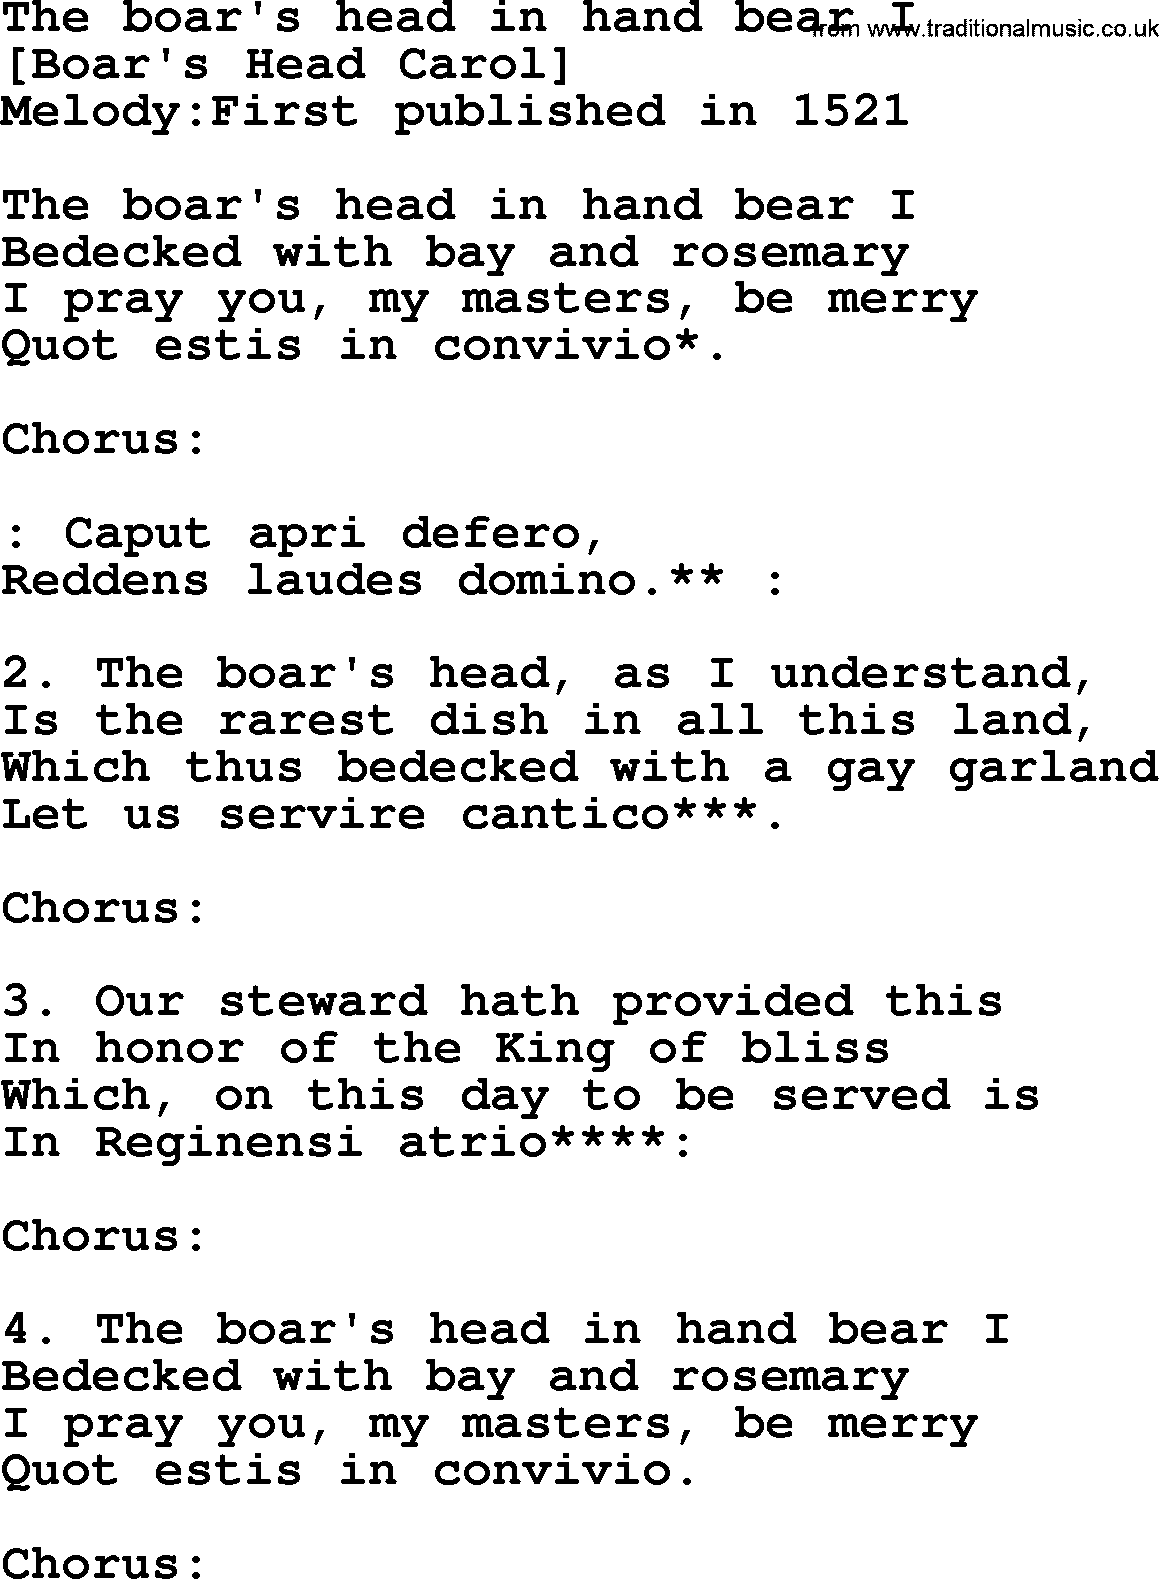 Old English Song: The Boar's Head In Hand Bear I lyrics